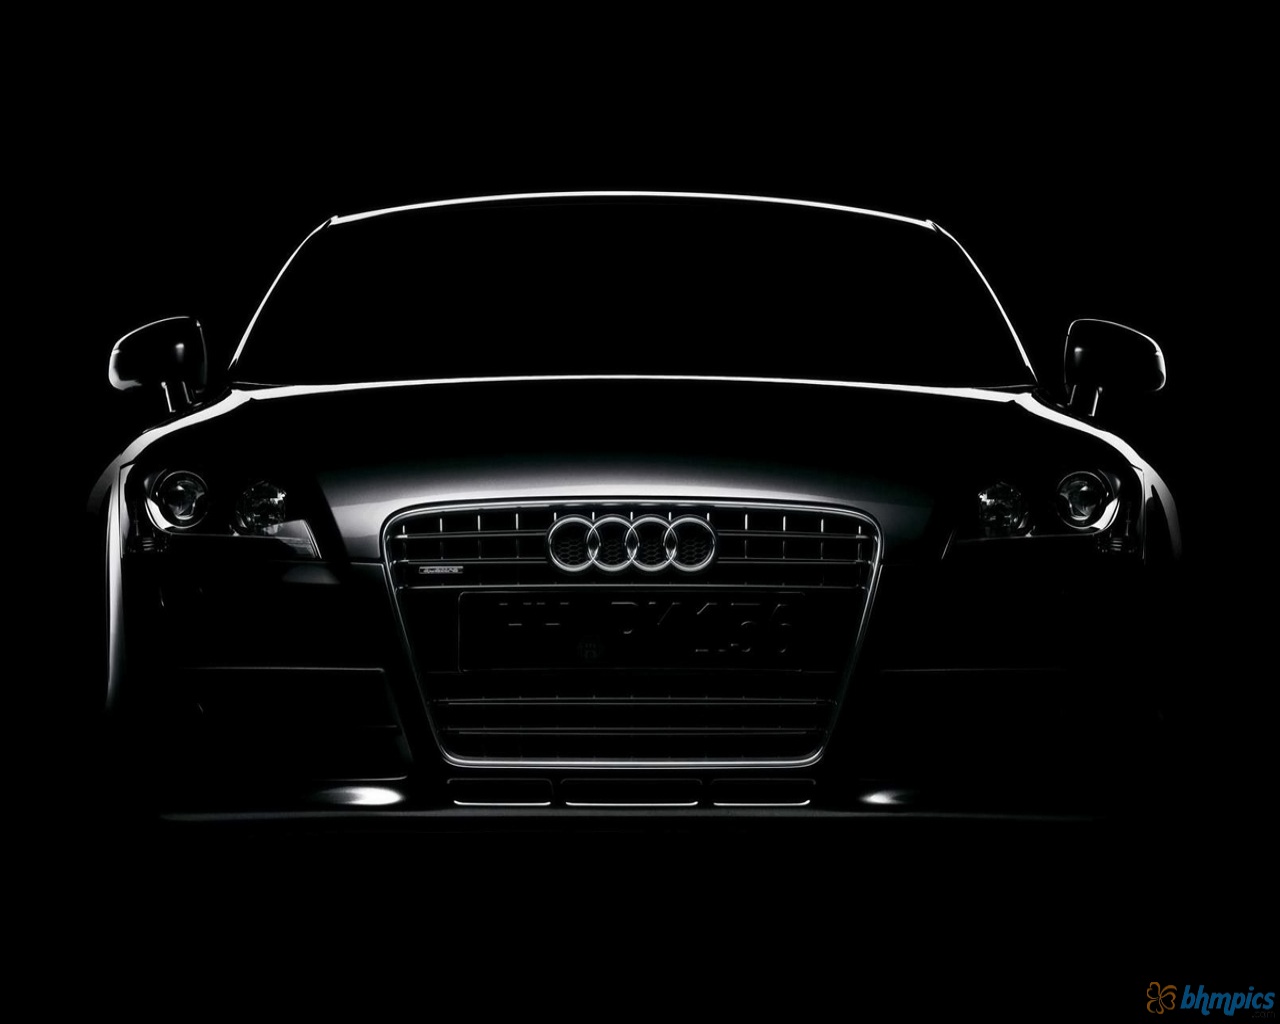 Audi Wallpaper Black 6413 Hd Wallpapers in Cars   Imagescicom 1280x1024